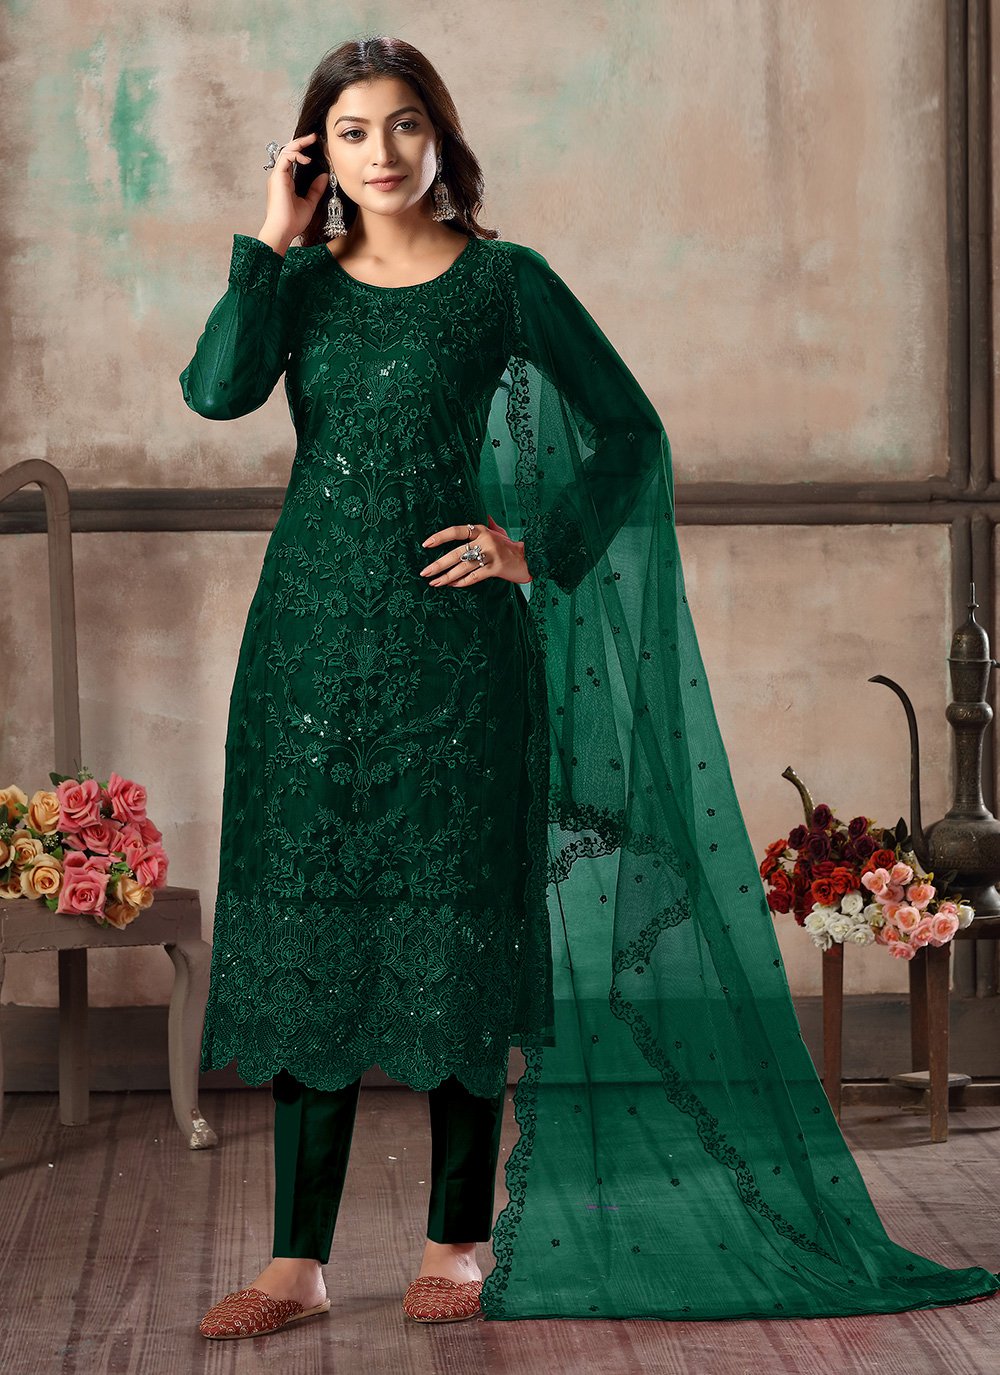 Full Sleeve Green Ladies Party Wear Long Suit Lehenga at Rs 17000 in Delhi